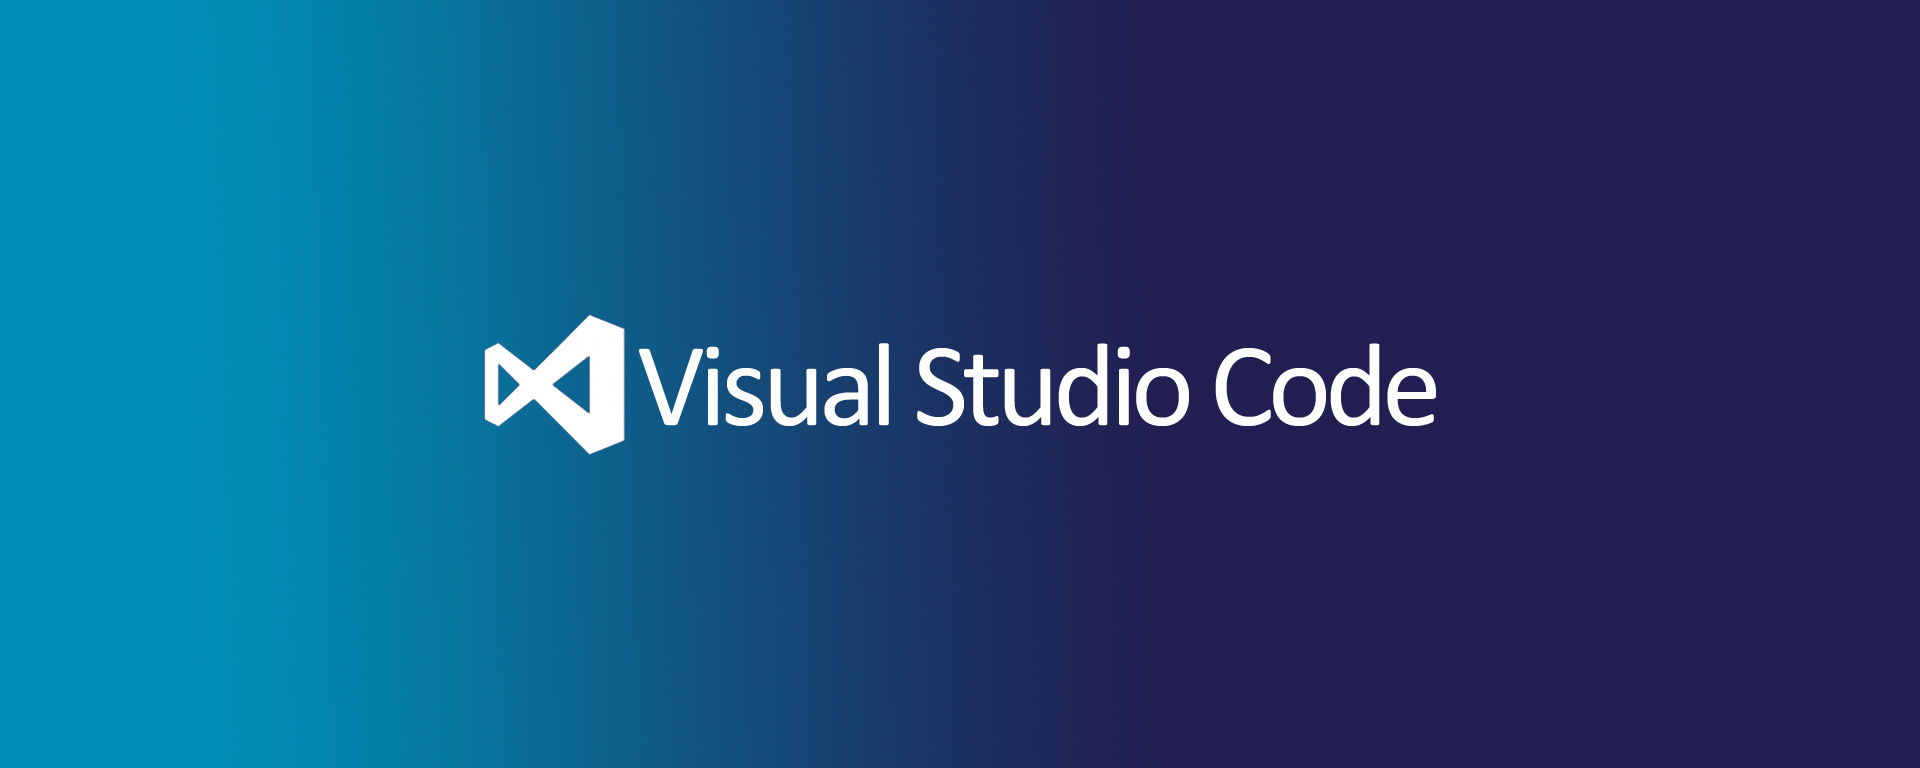 visual studio code vs visual studio 2015